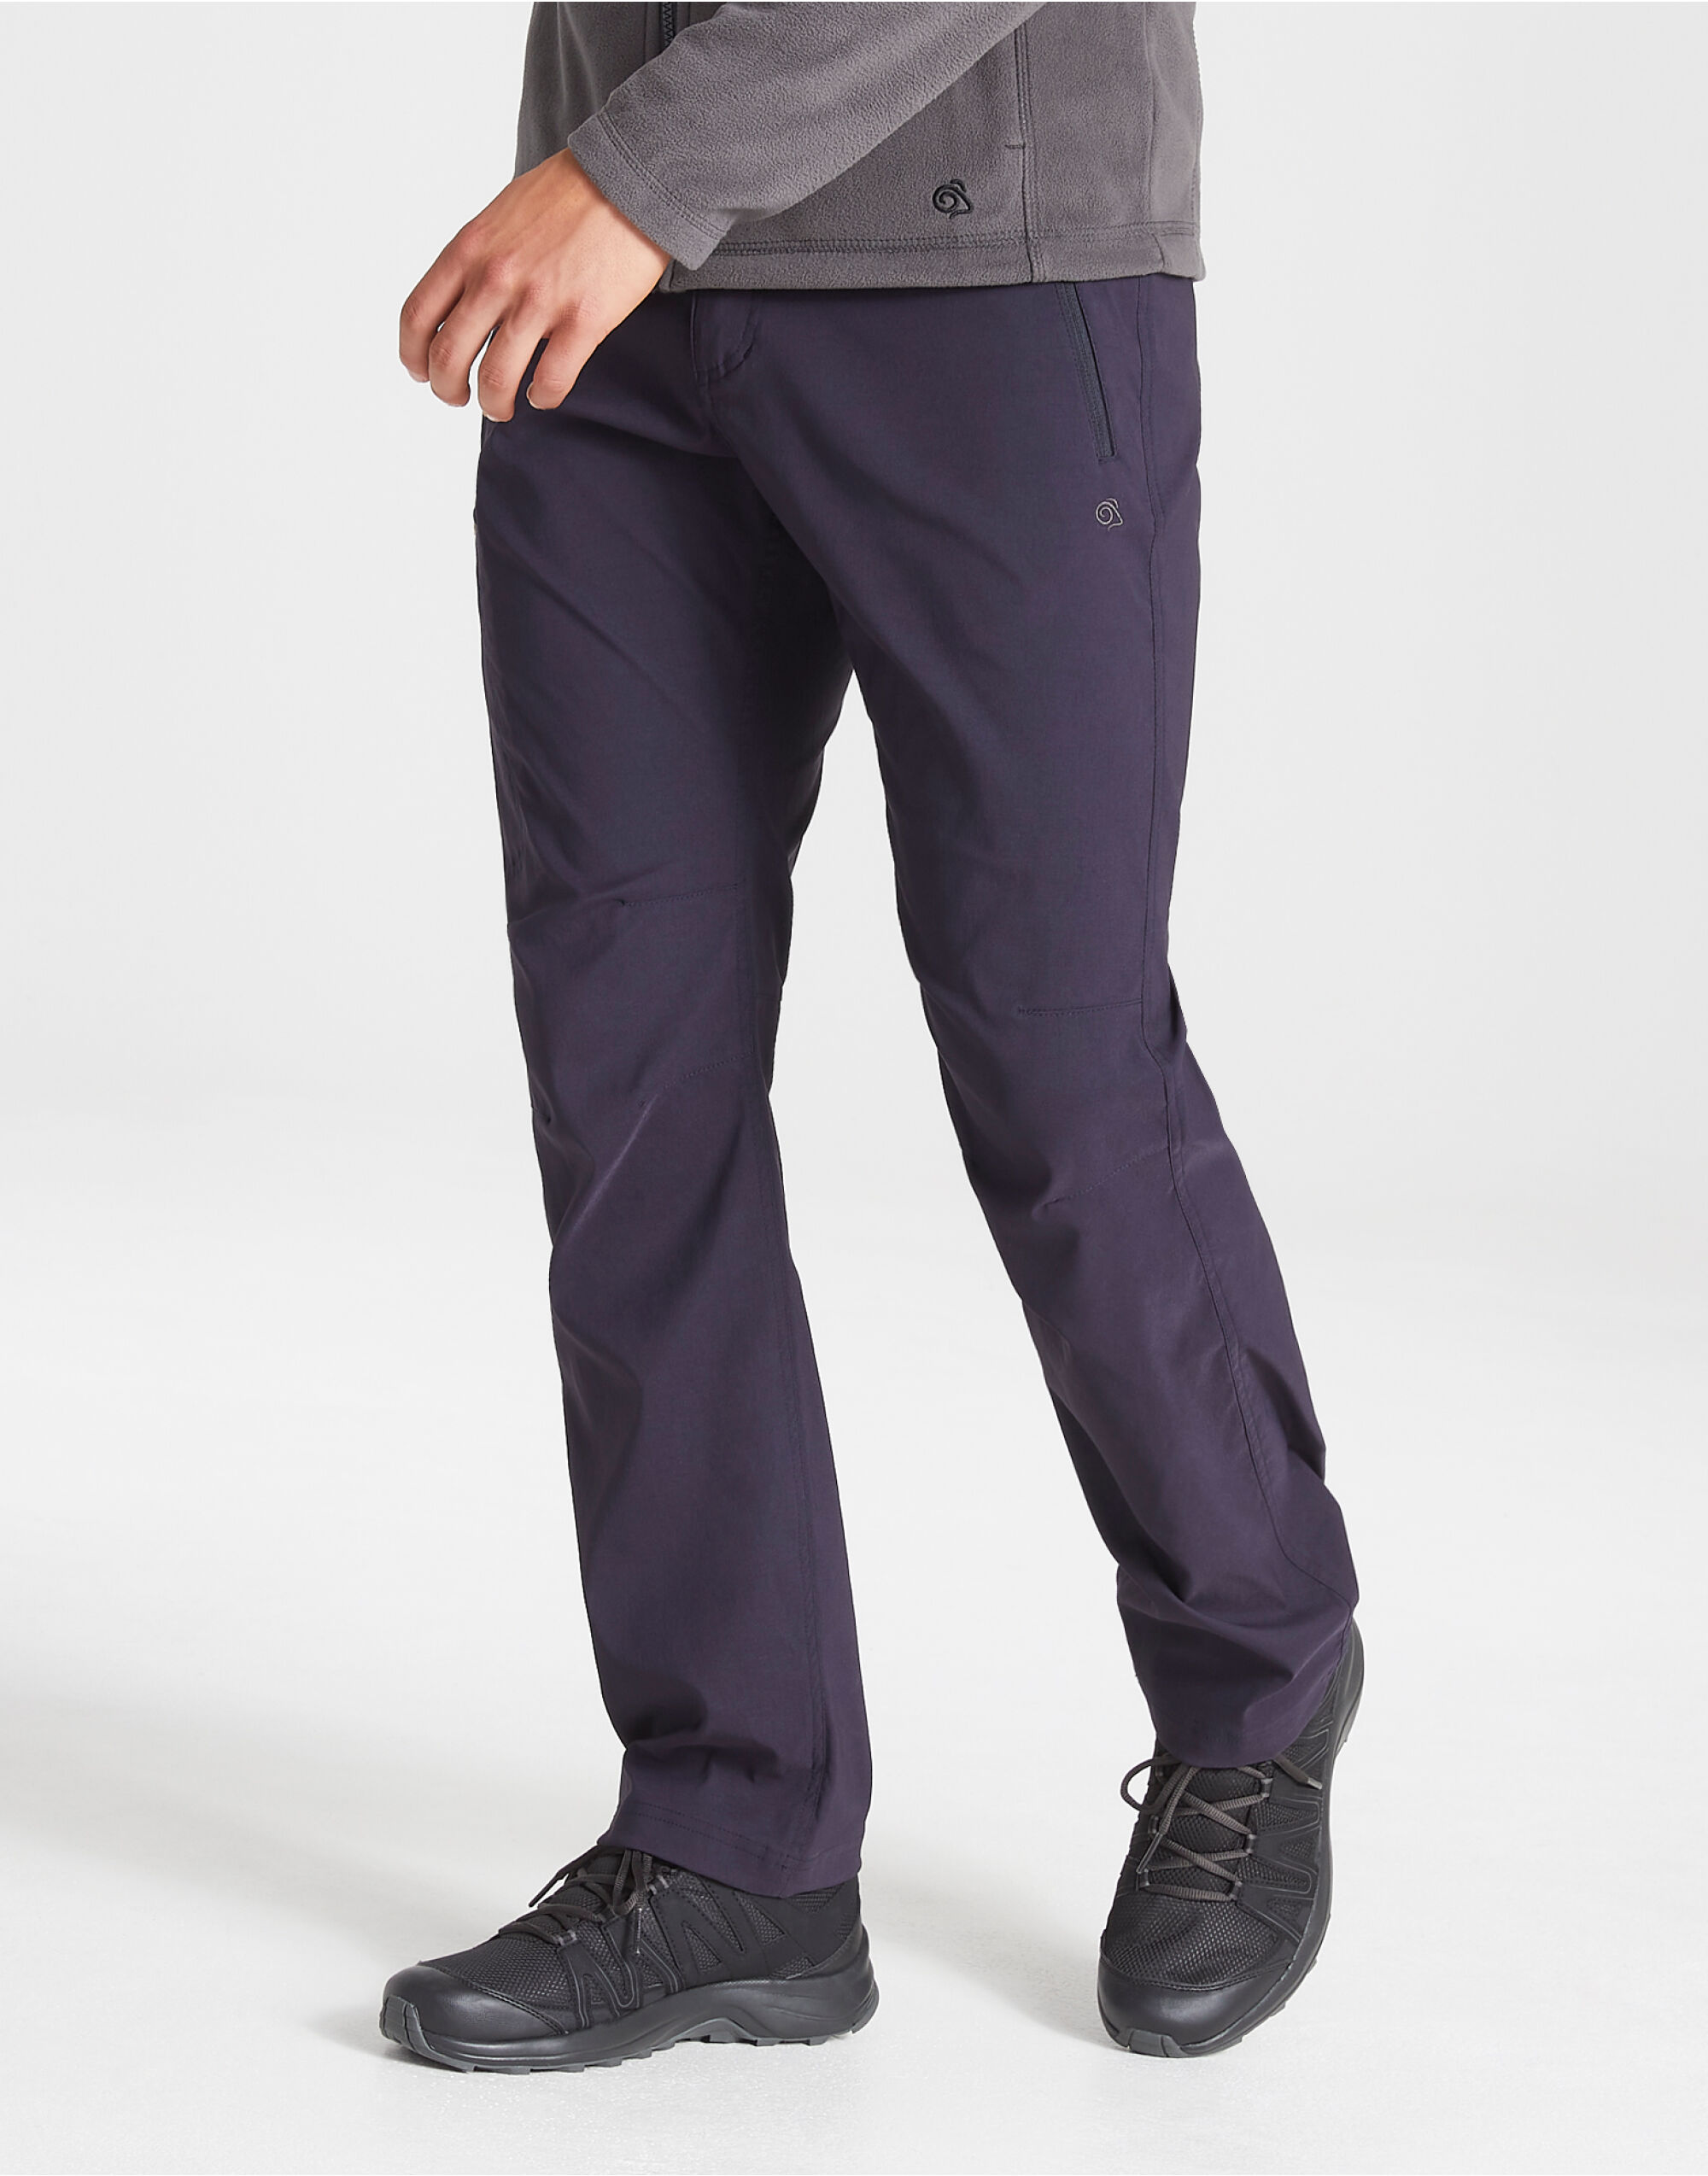 Men's Expert Kiwi Pro II Stretch Trousers (Regular)